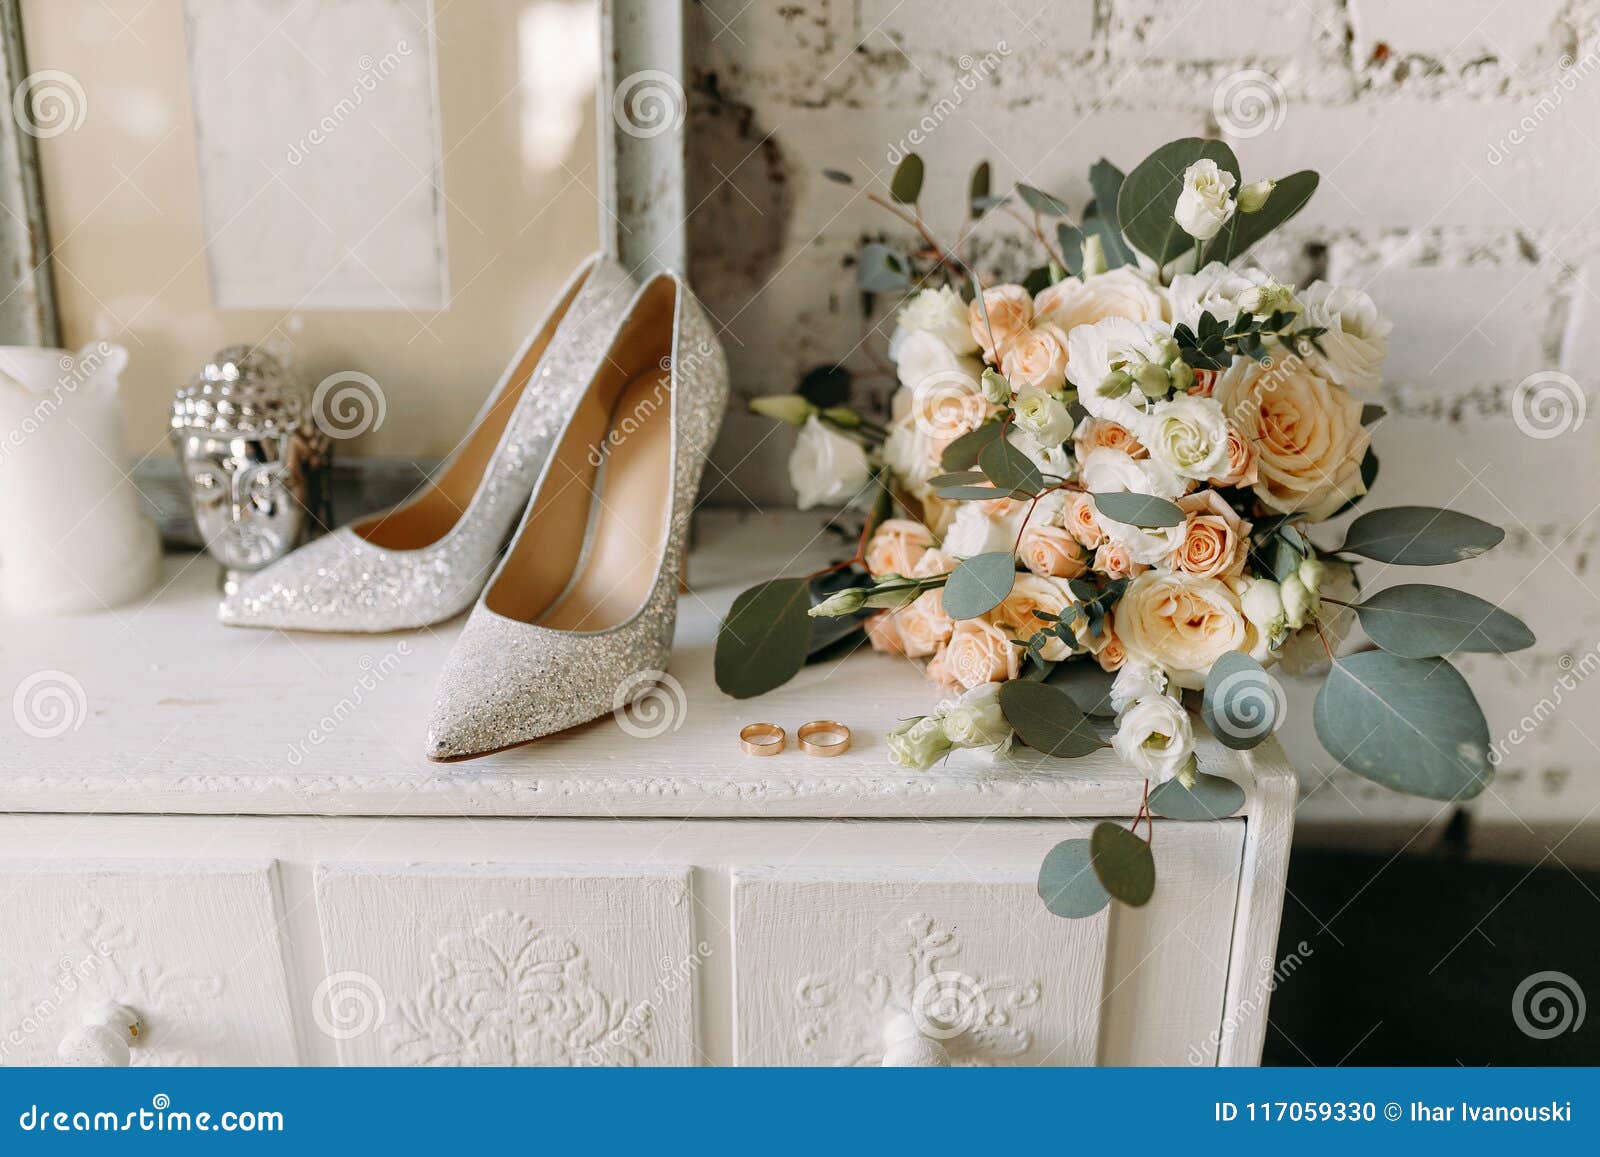 Wedding Shoes And Wedding Paraphernalia Wedding Gold Rings